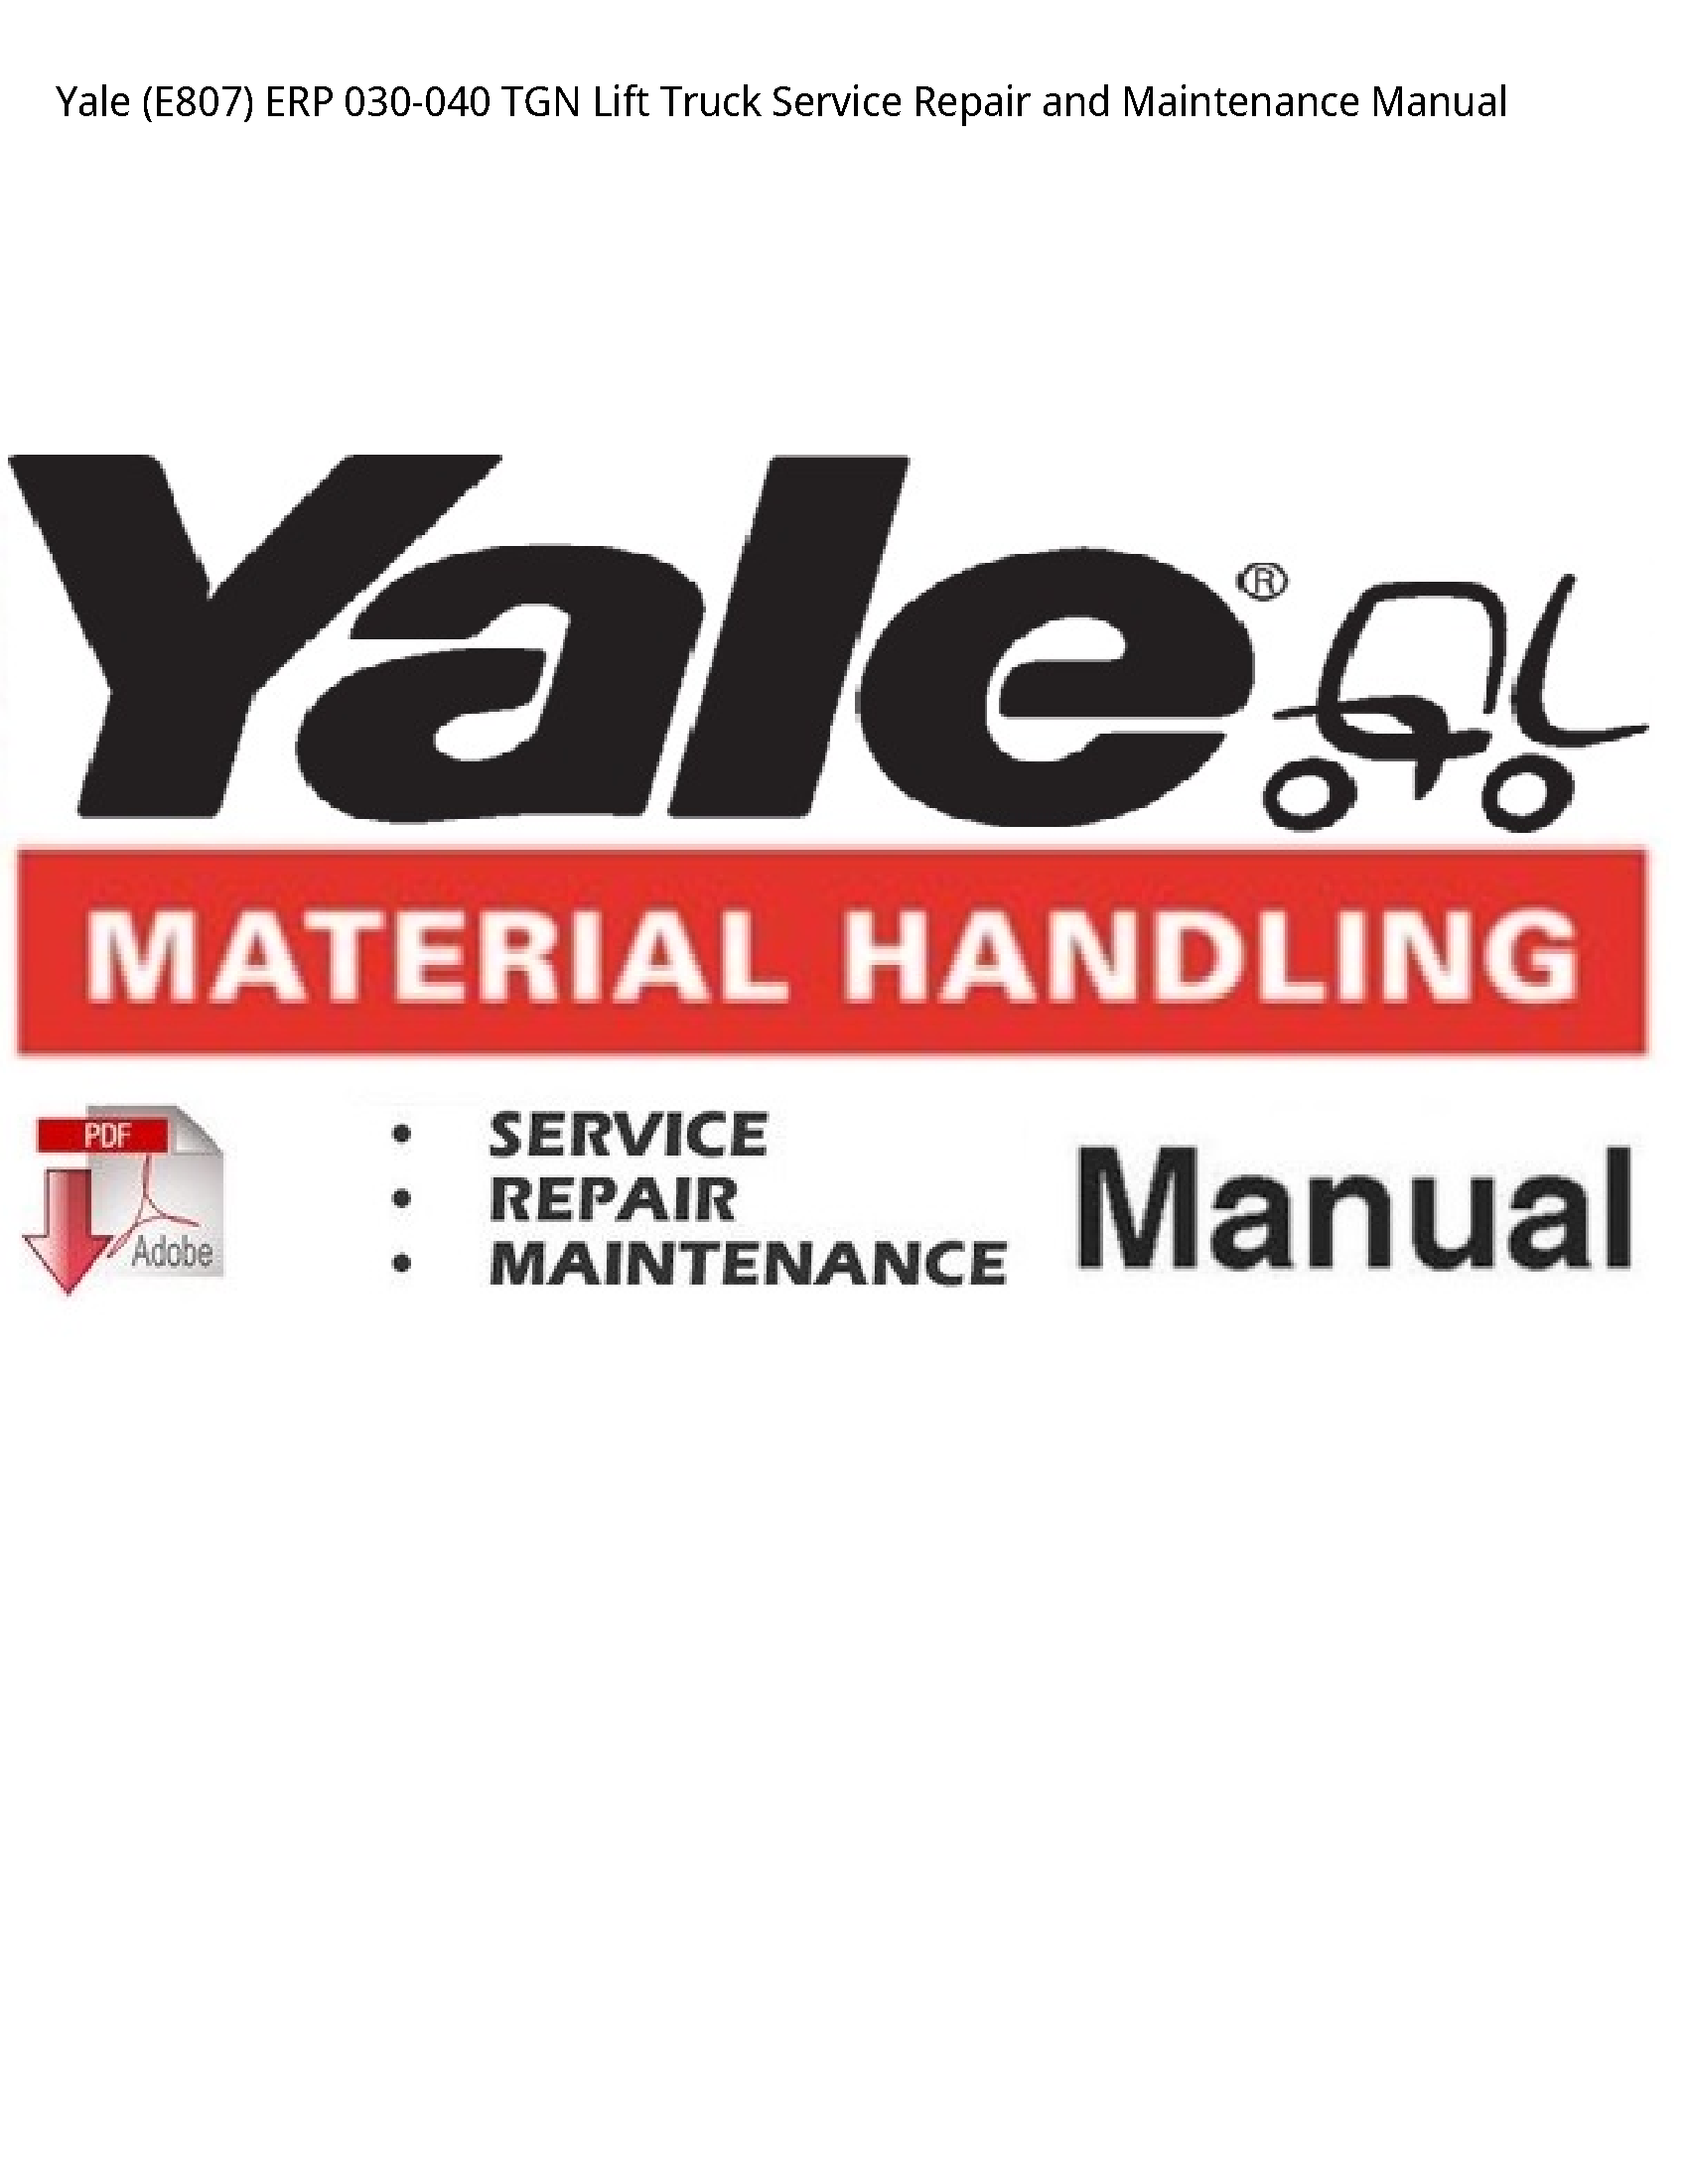 Yale (E807) ERP TGN Lift Truck manual